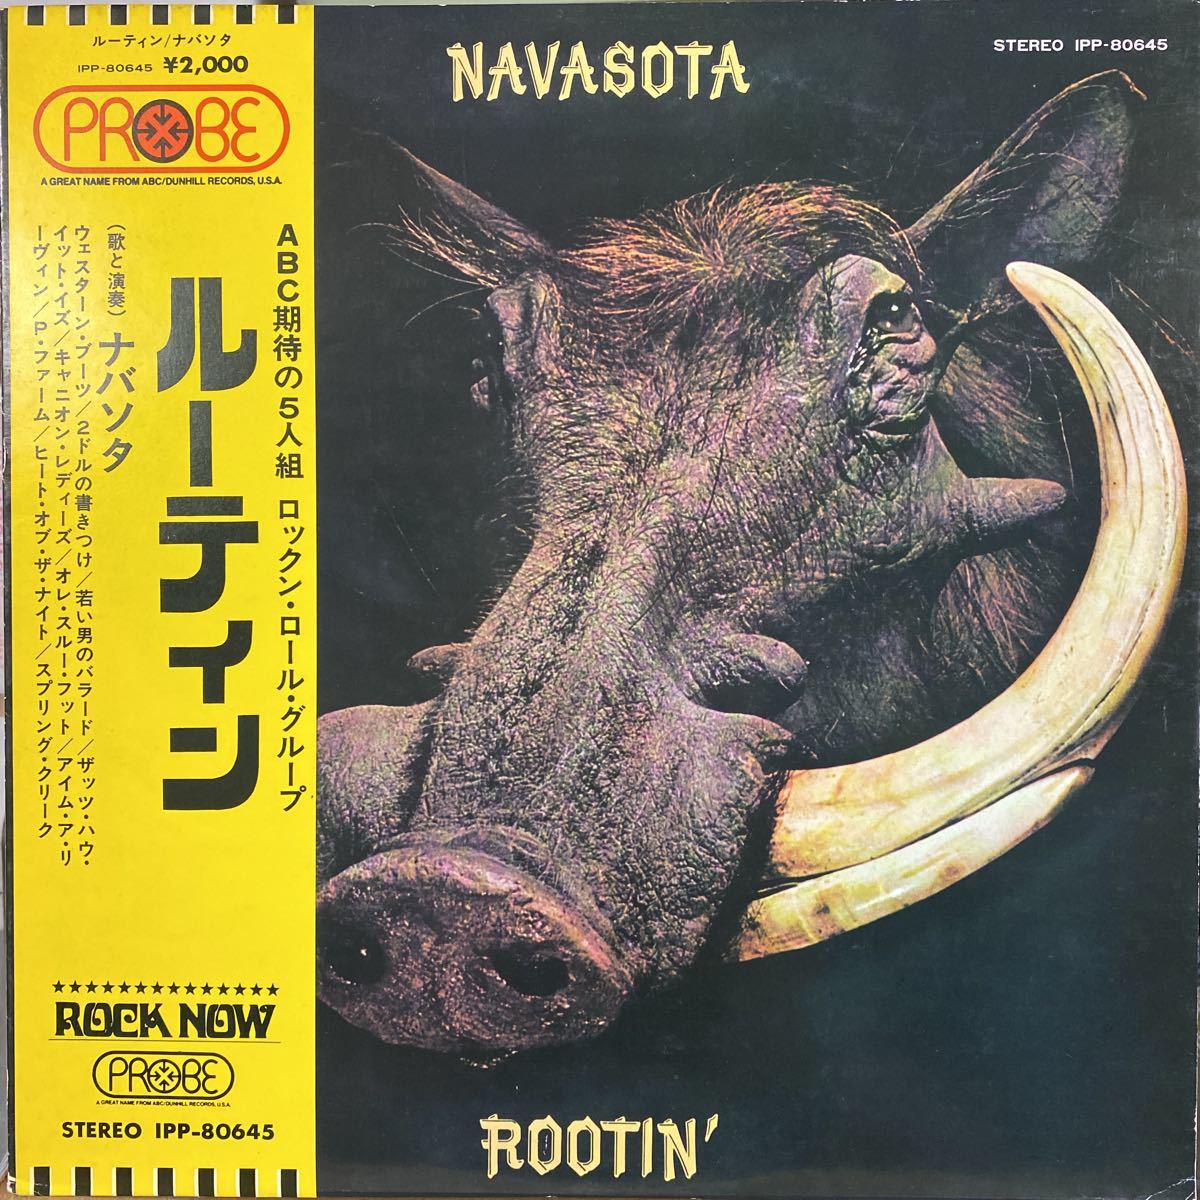  Toshiba sound . original sample white label ROCK NOW supplement with belt beautiful record Donald *feigen Jeff * Baxter participation *nabasota/ Roo tinSTEELY dan